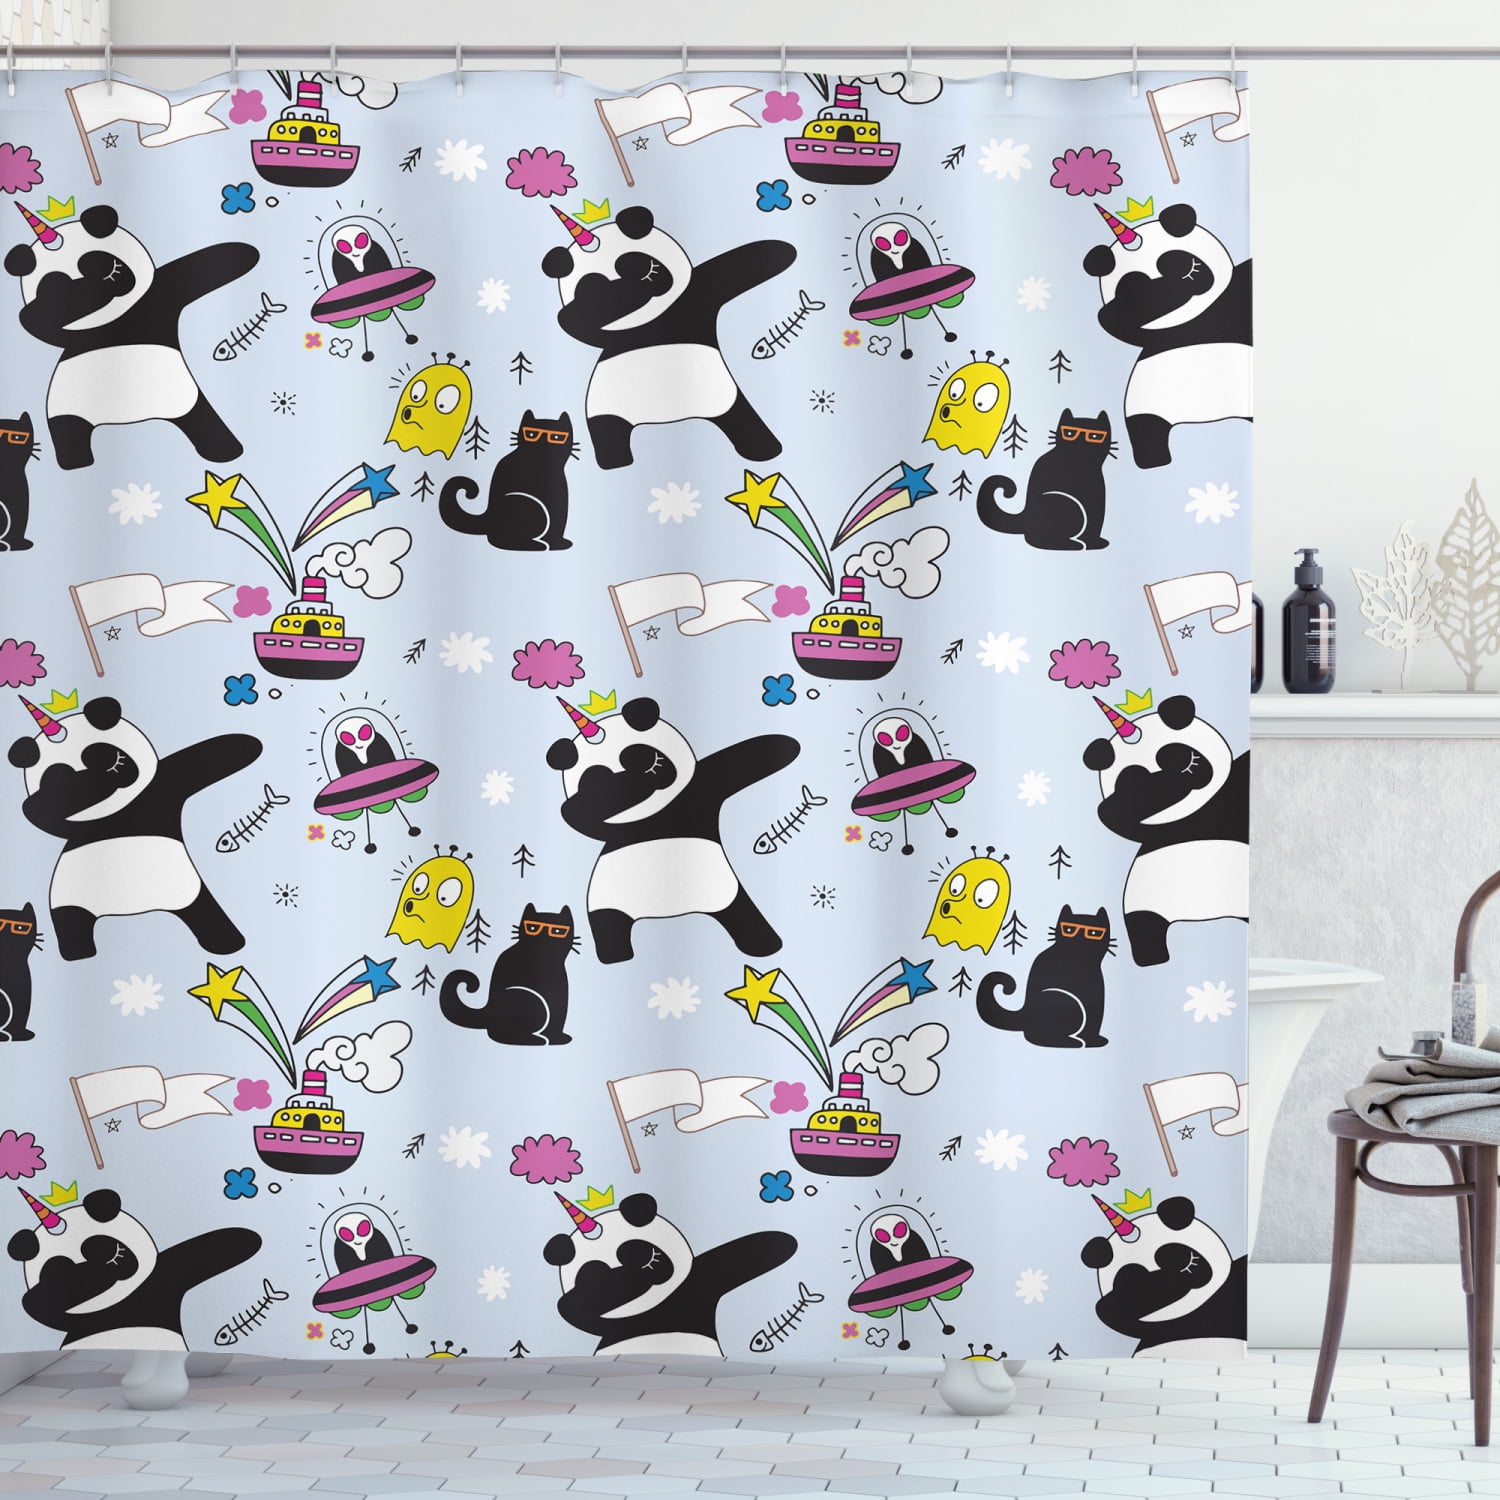 Emoji Peva Shower Curtain 72" x 72" Kids Family Funny Monkey Lips Silly Poo NEW 